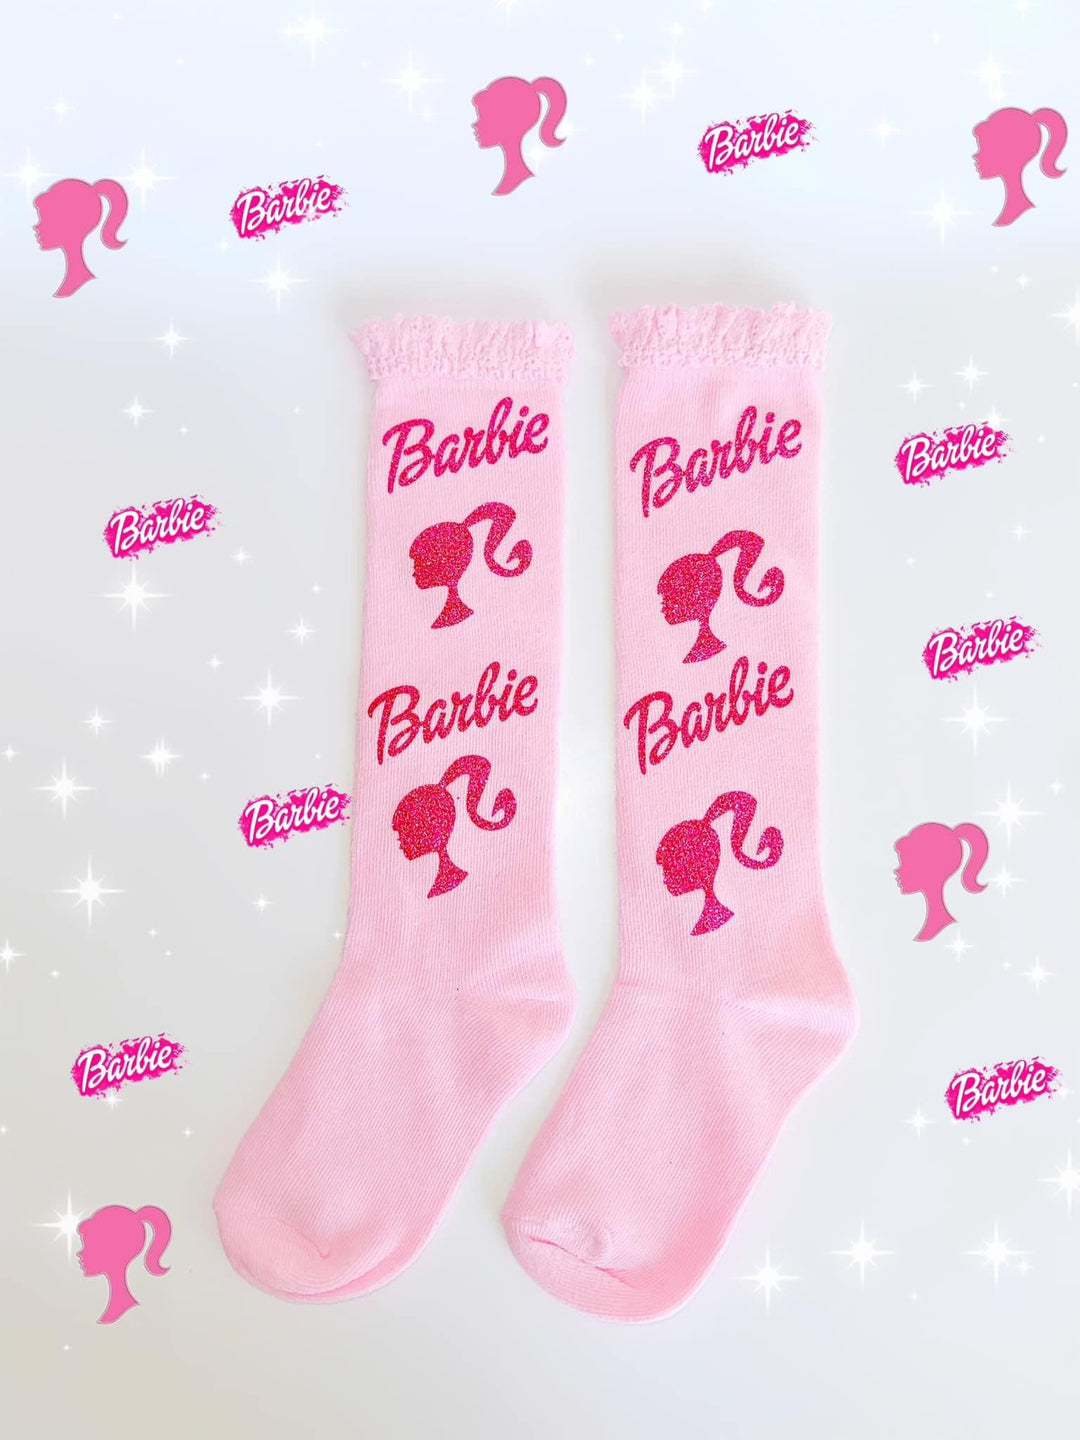 Barbie socks